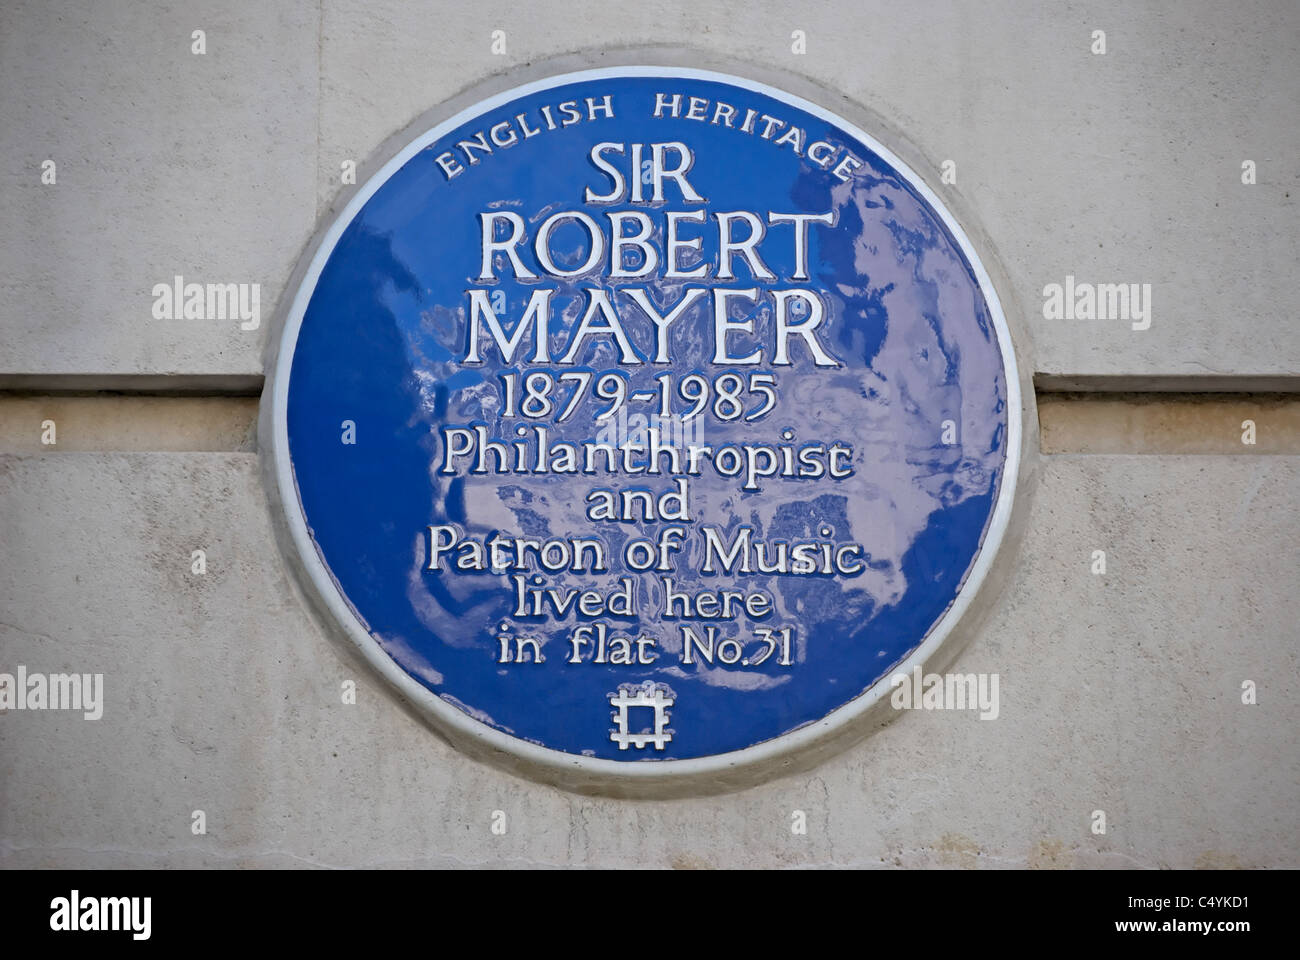 english heritage blue plaque marking a home of philanthropist sir robert mayer, marylebone, london, england Stock Photo